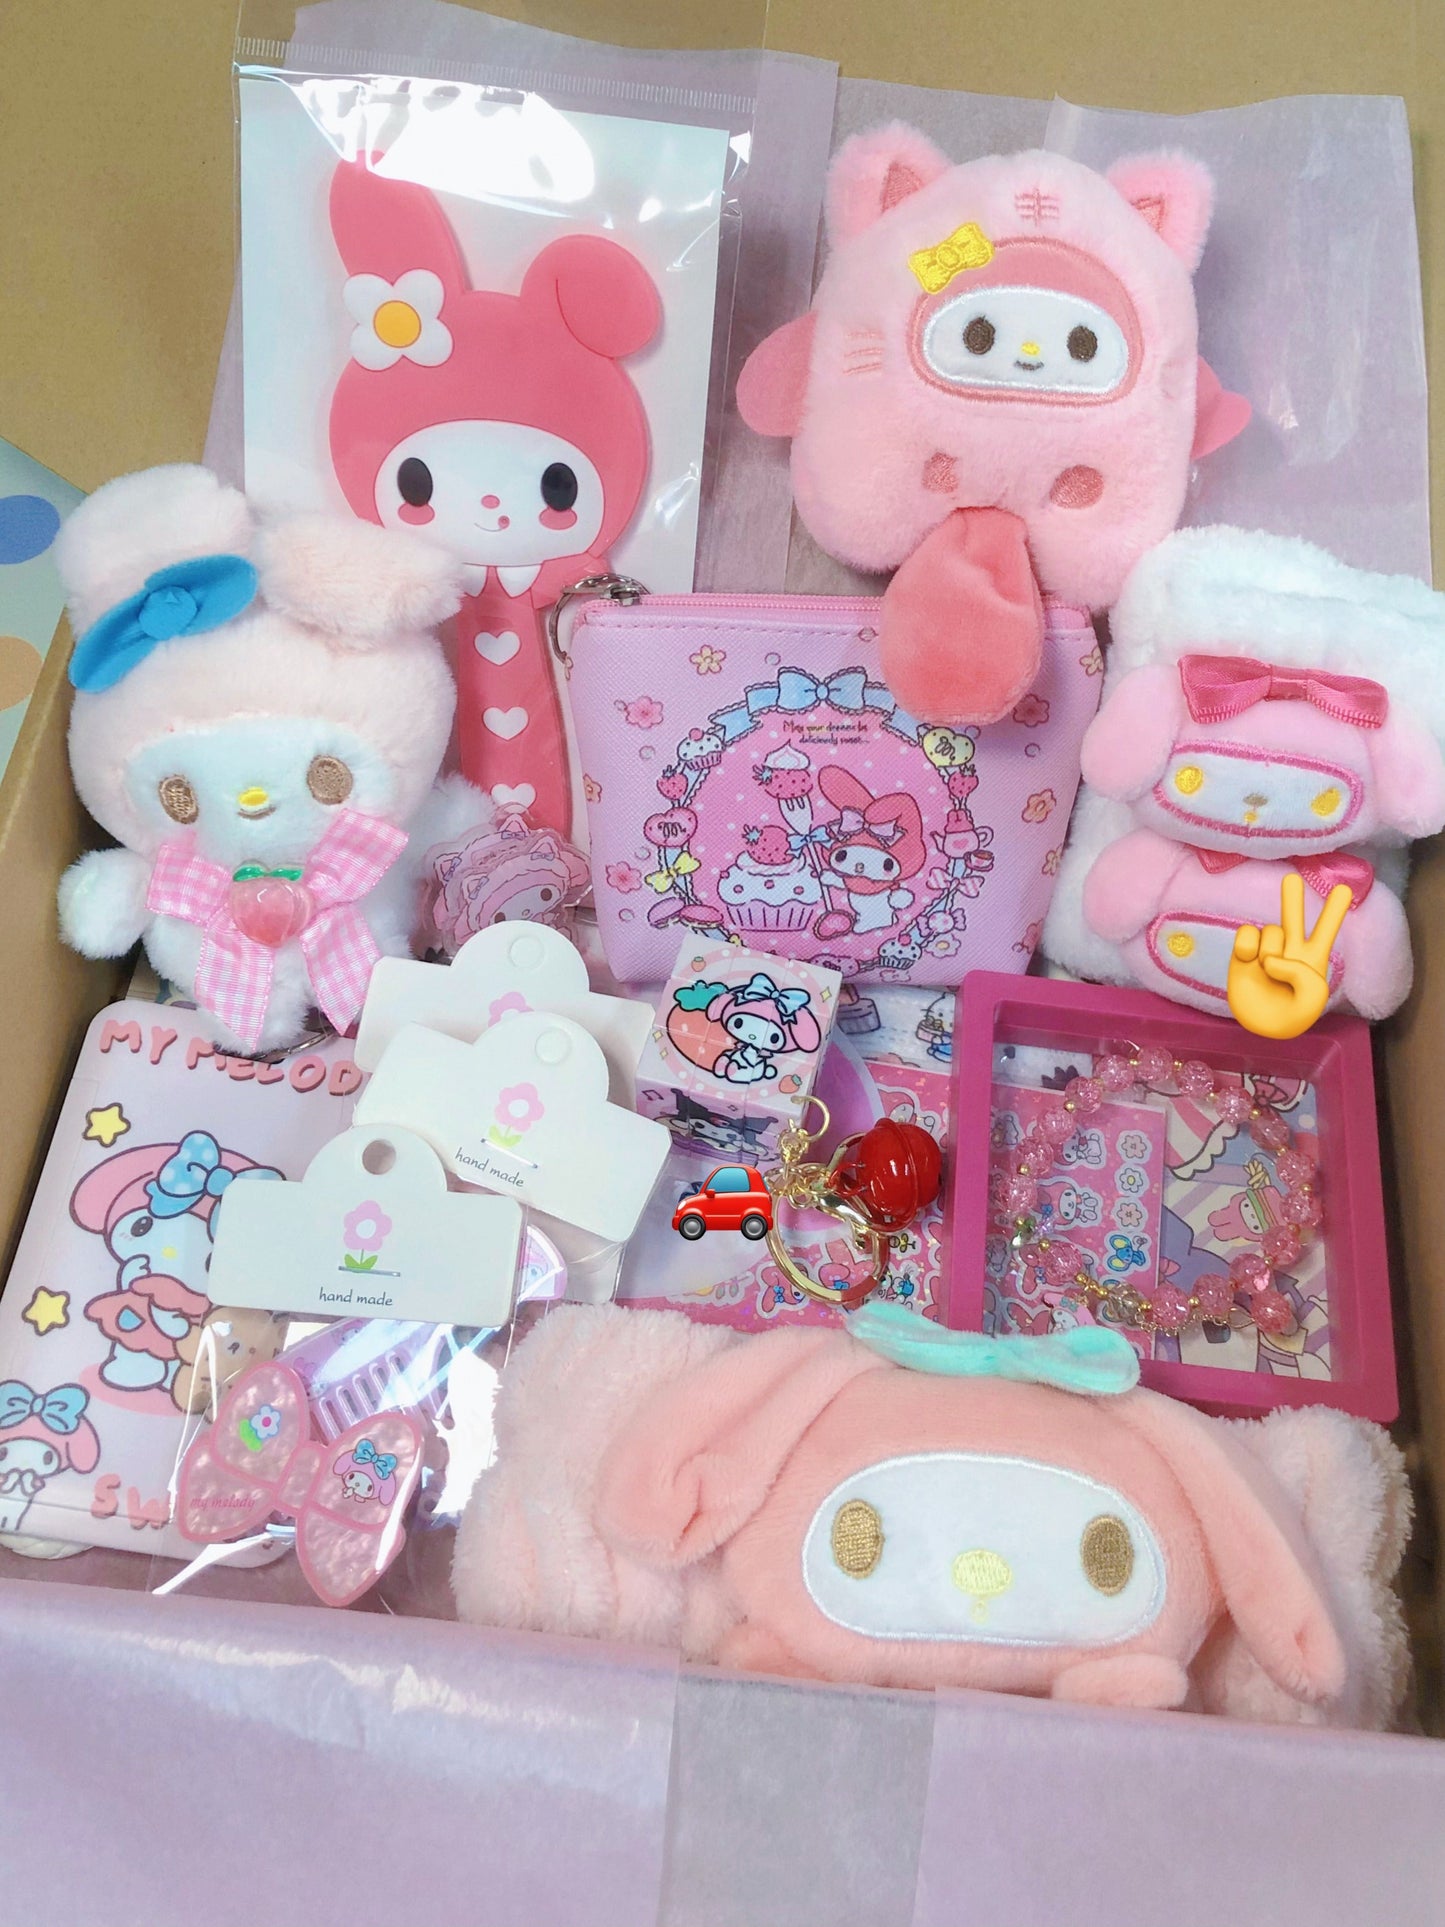 My Melody Mystery Gift Box - In Kawaii Shop